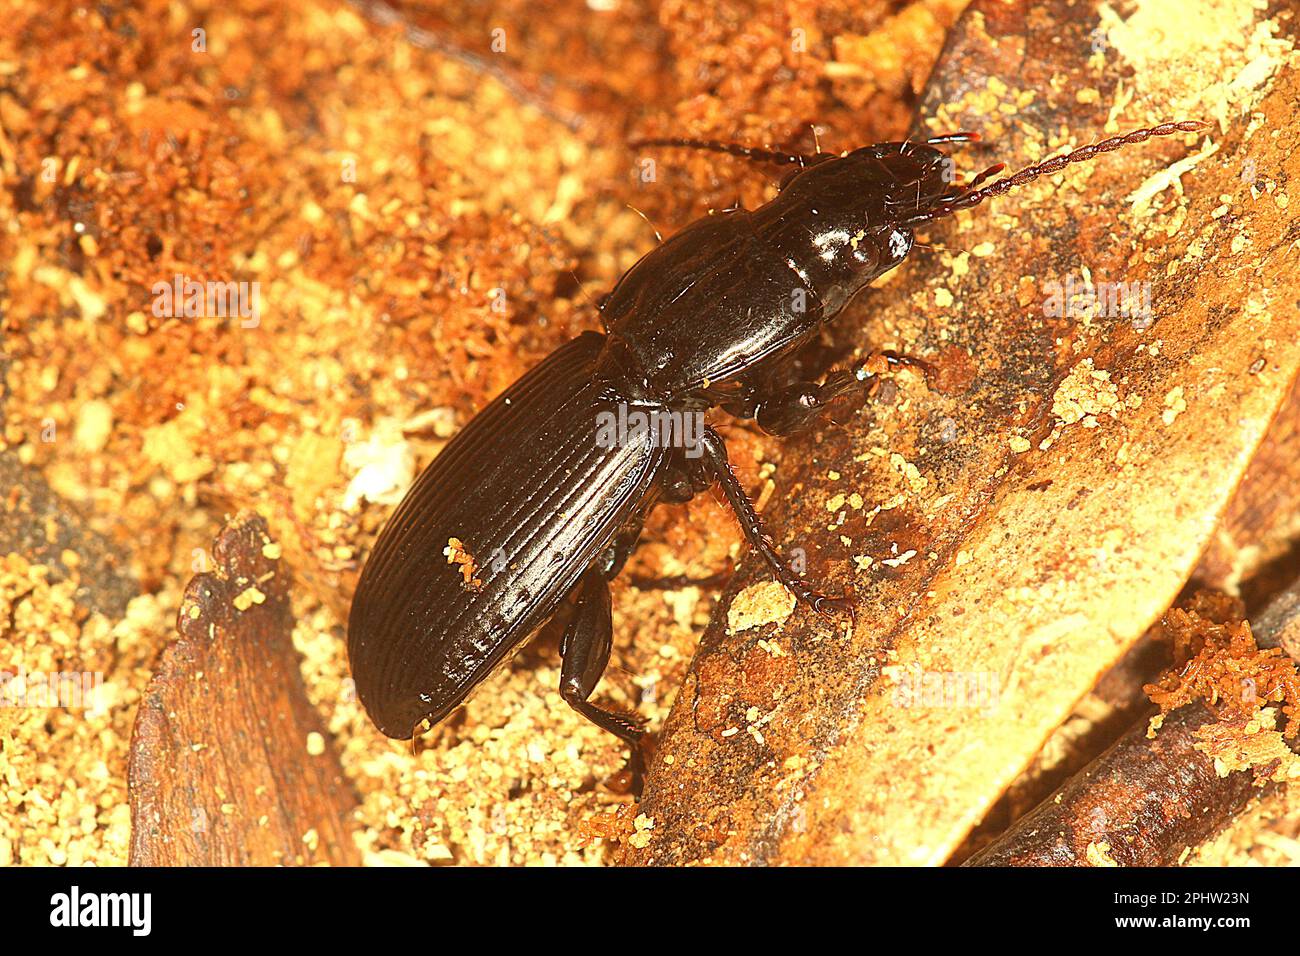 New Zealand ground beetle (Holcapsis sp.) Stock Photo